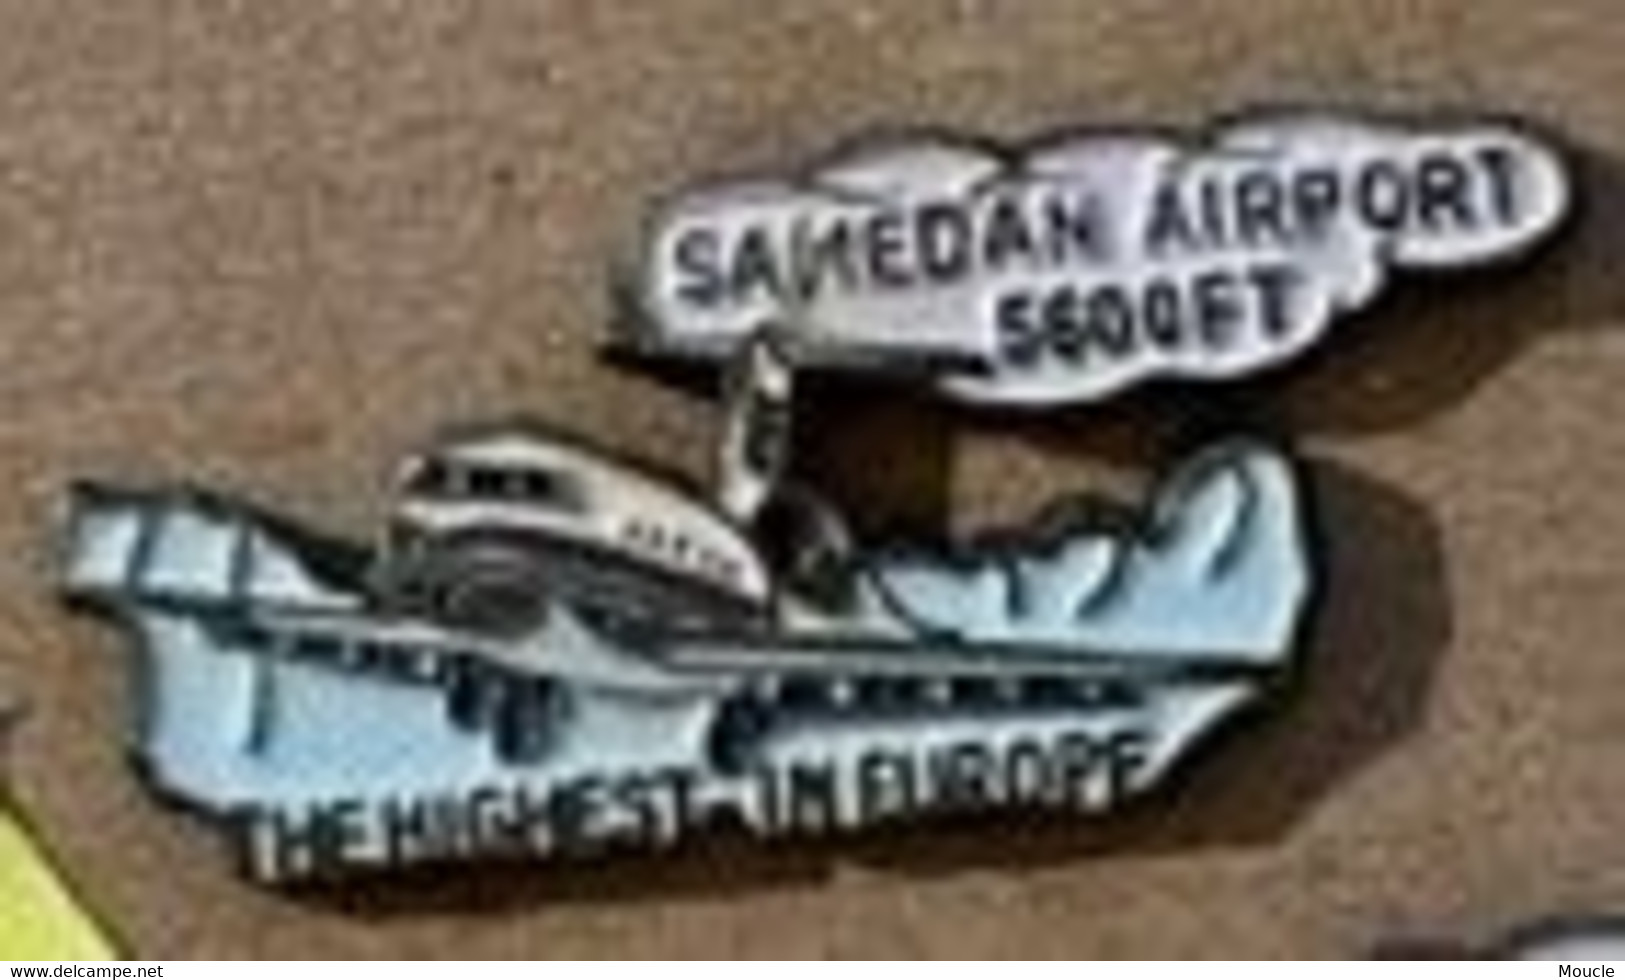 SAMEDAN AIRPORT 5600ft - THE HIGHEST IN EUROPE - PLANE - AVION - FOND BLANC - FLUGZEUG - AEREO-     (24) - Avions